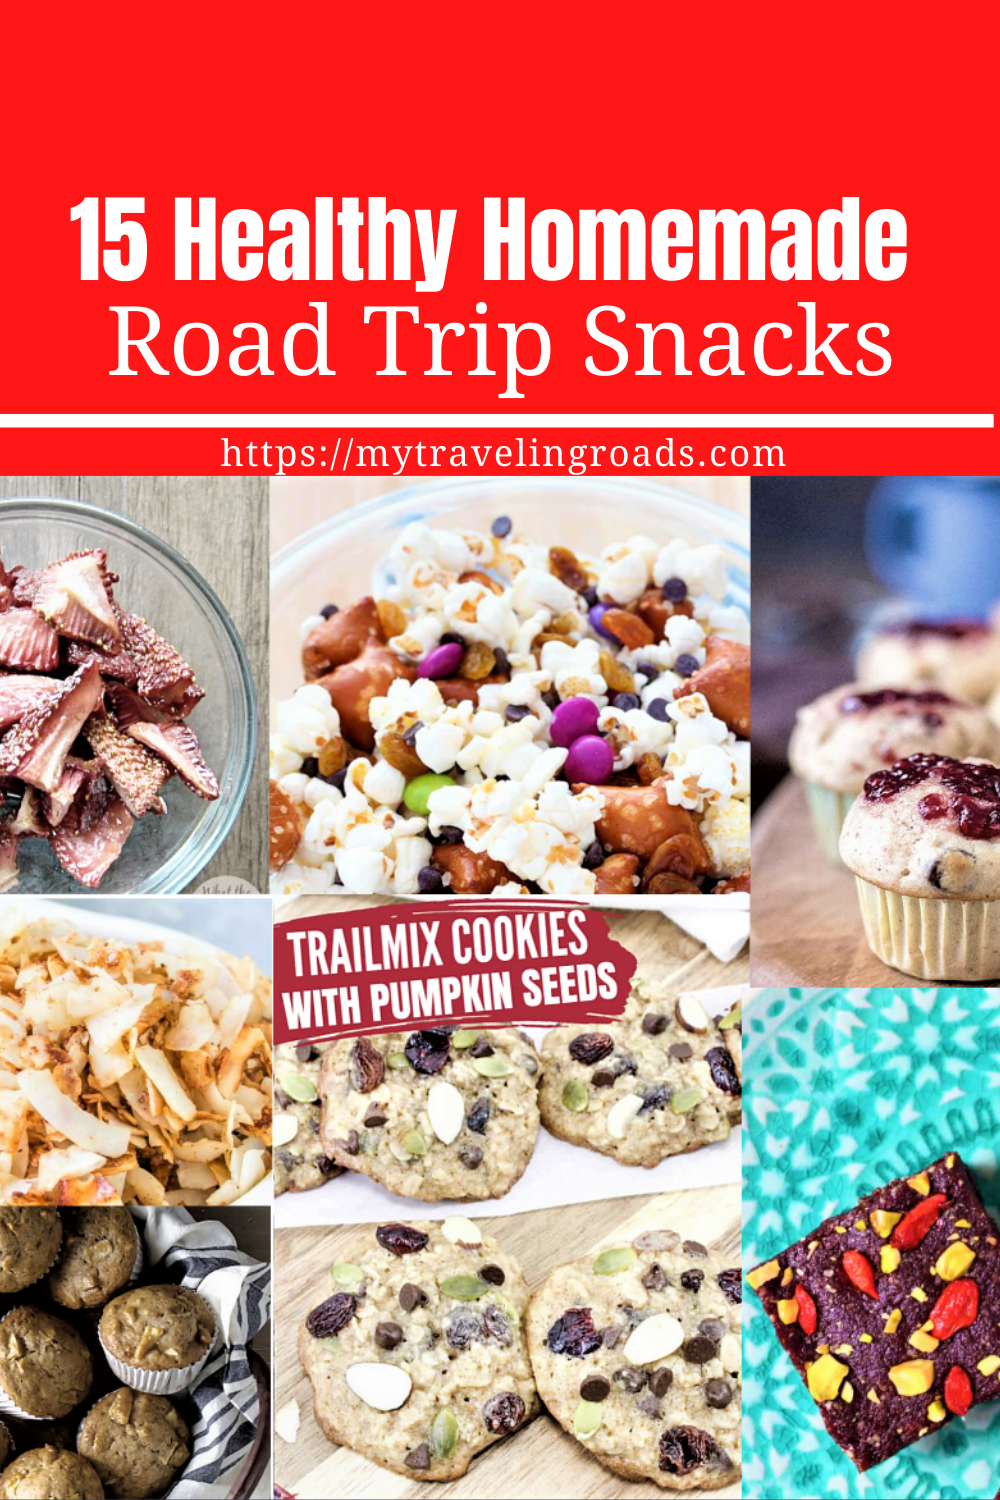 https://mytravelingroads.com/wp-content/uploads/2020/08/Healthy-Homemade-Road-Trip-Snacks.png